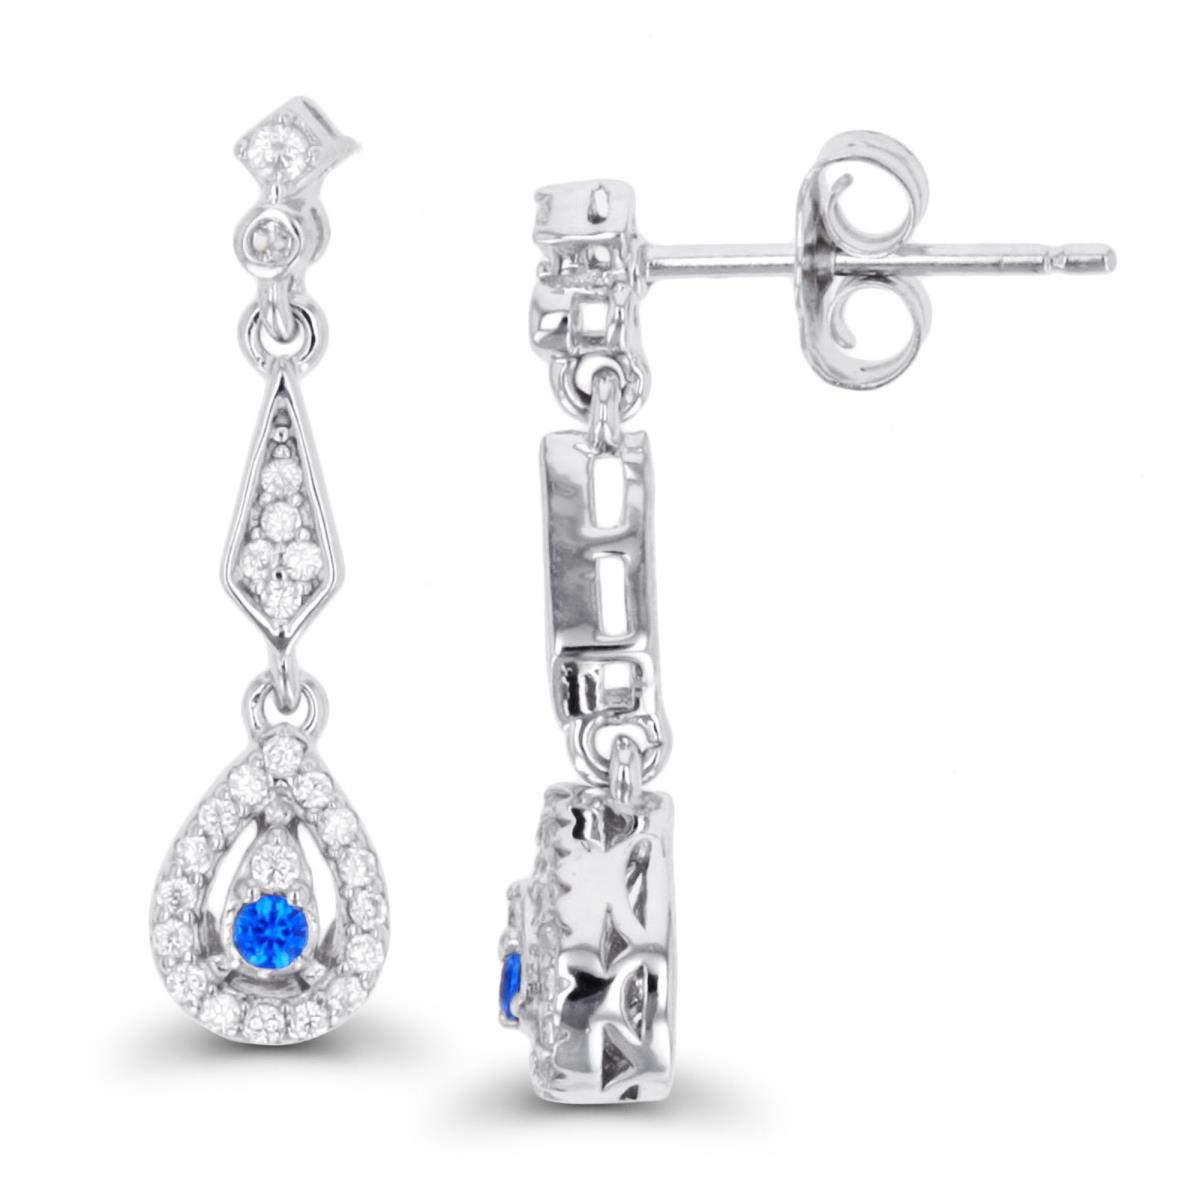 Sterling Silver Rhodium CZ & #113 Blue Dangling Pear Earring